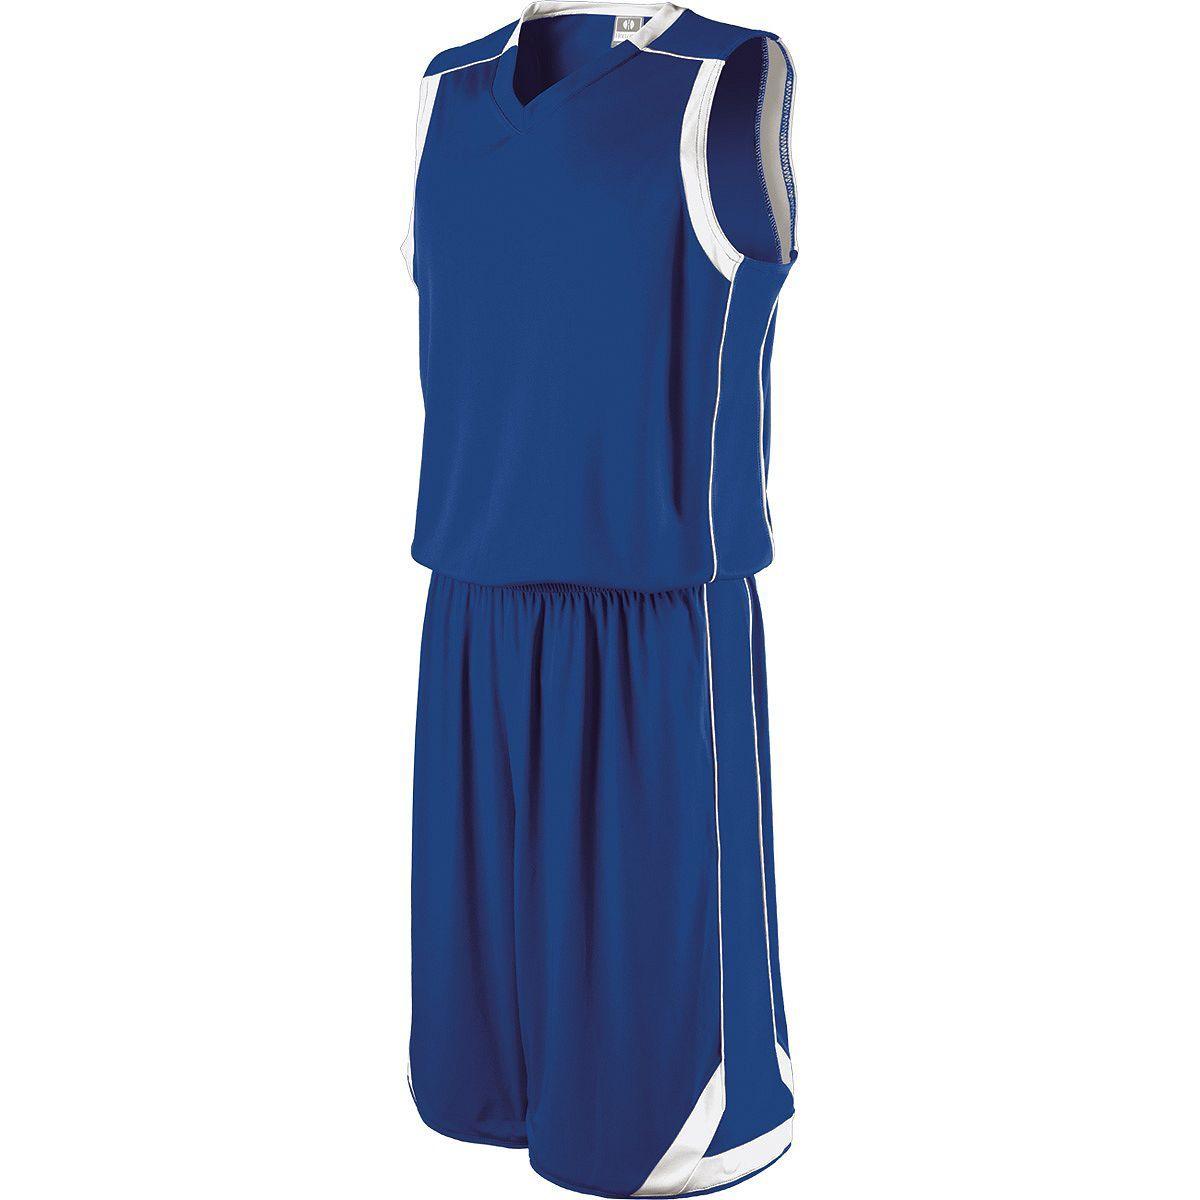 Carthage Basketball Jersey - Dresses Max